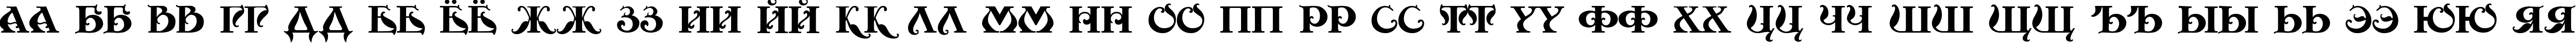 Пример написания русского алфавита шрифтом Moulin Rouge